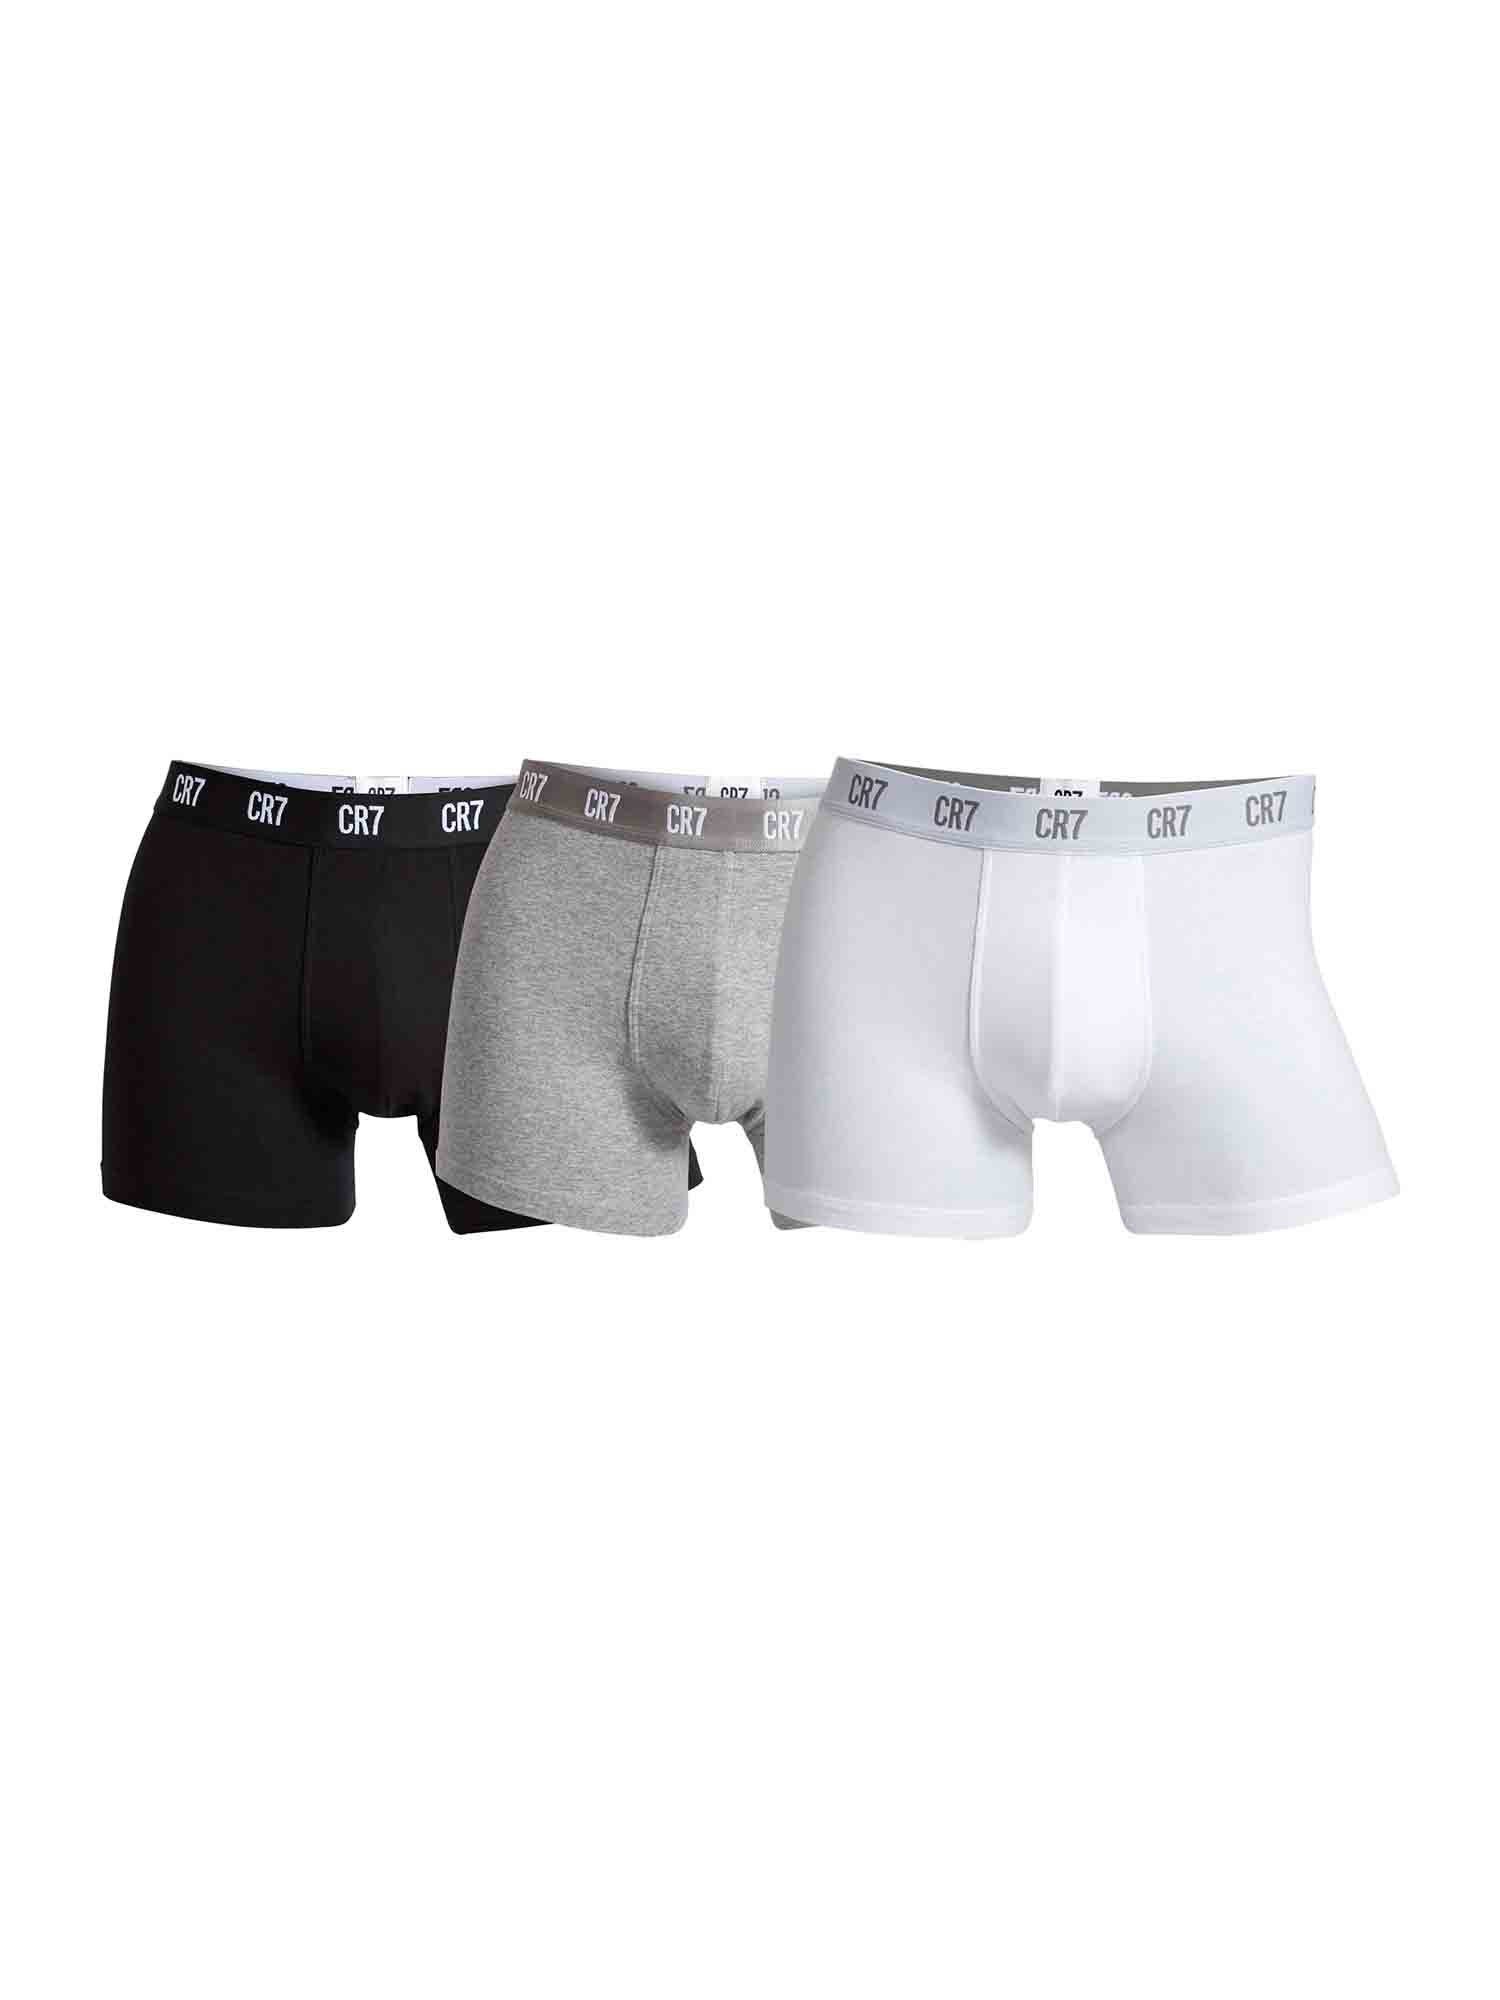 CR7 Retro Pants Herren Männer Boxershorts Retro Pants Trunks Multipack (3-St) Multi 3